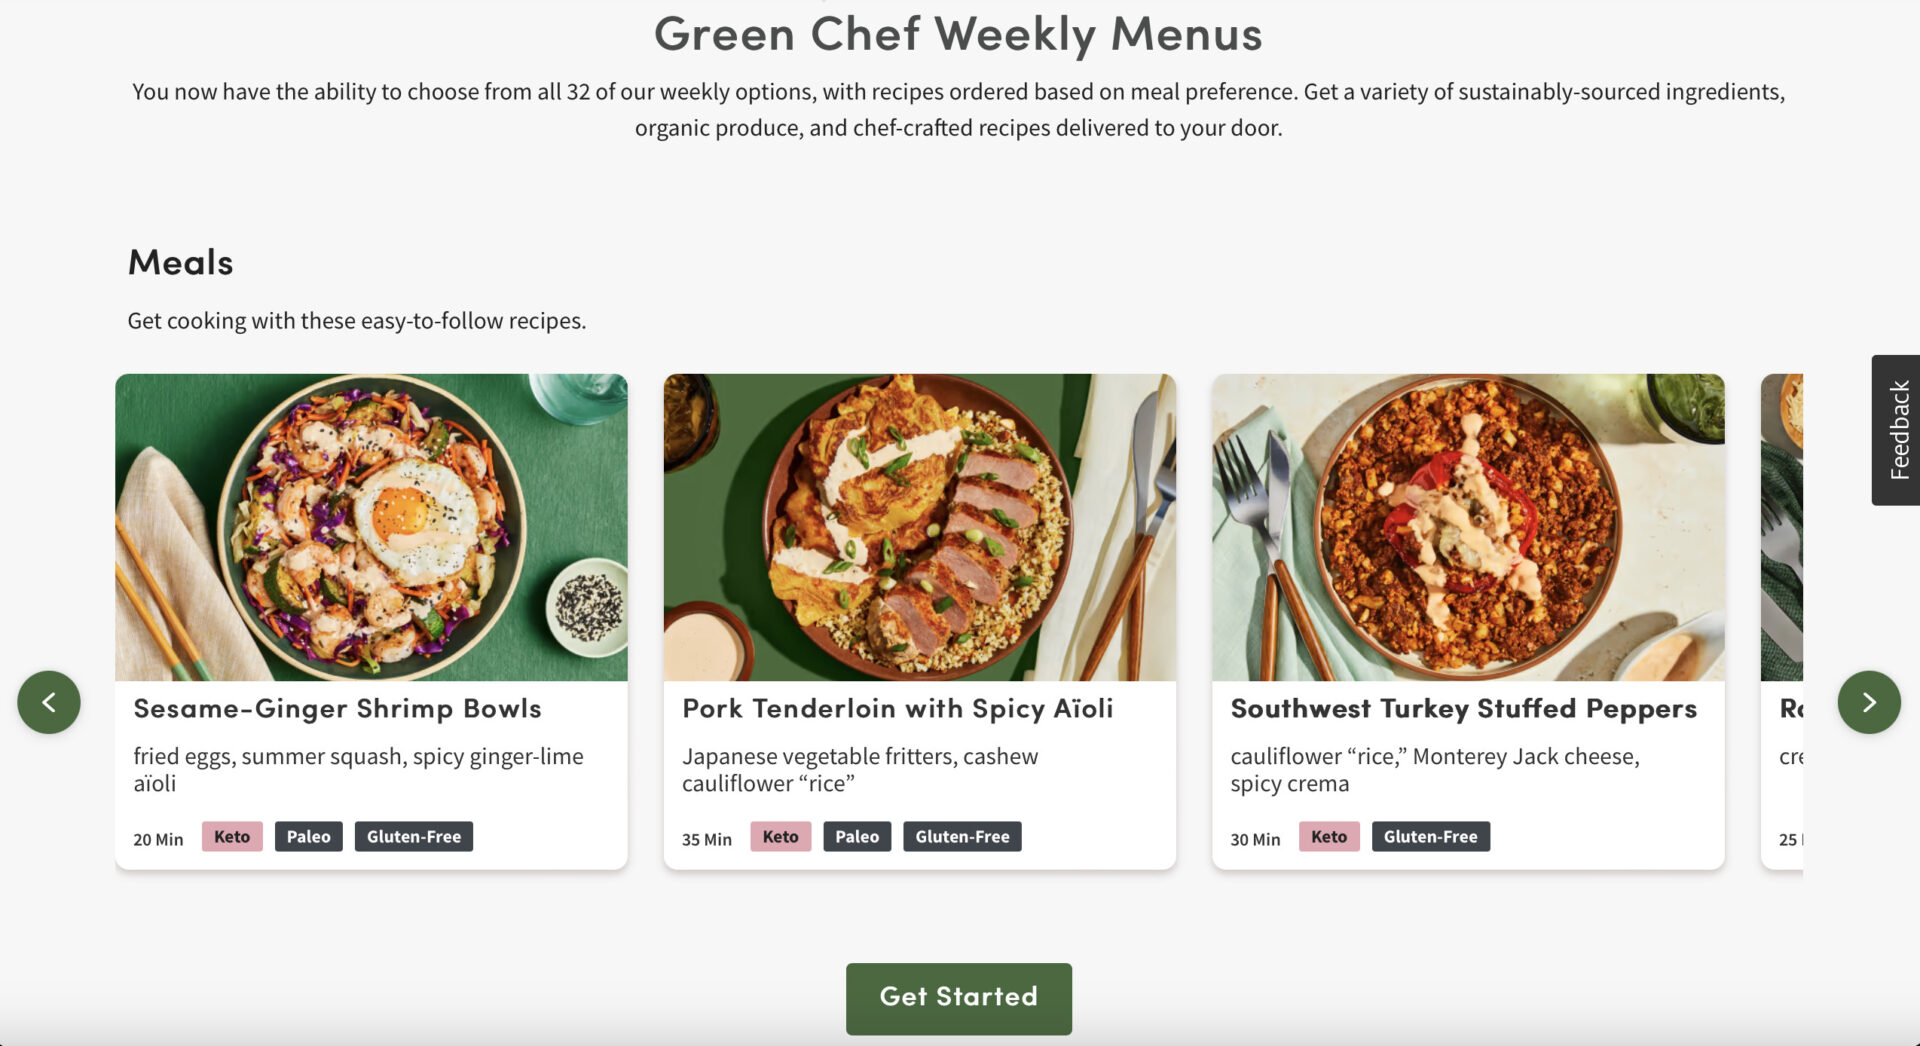 Green Chef Weekly Menus